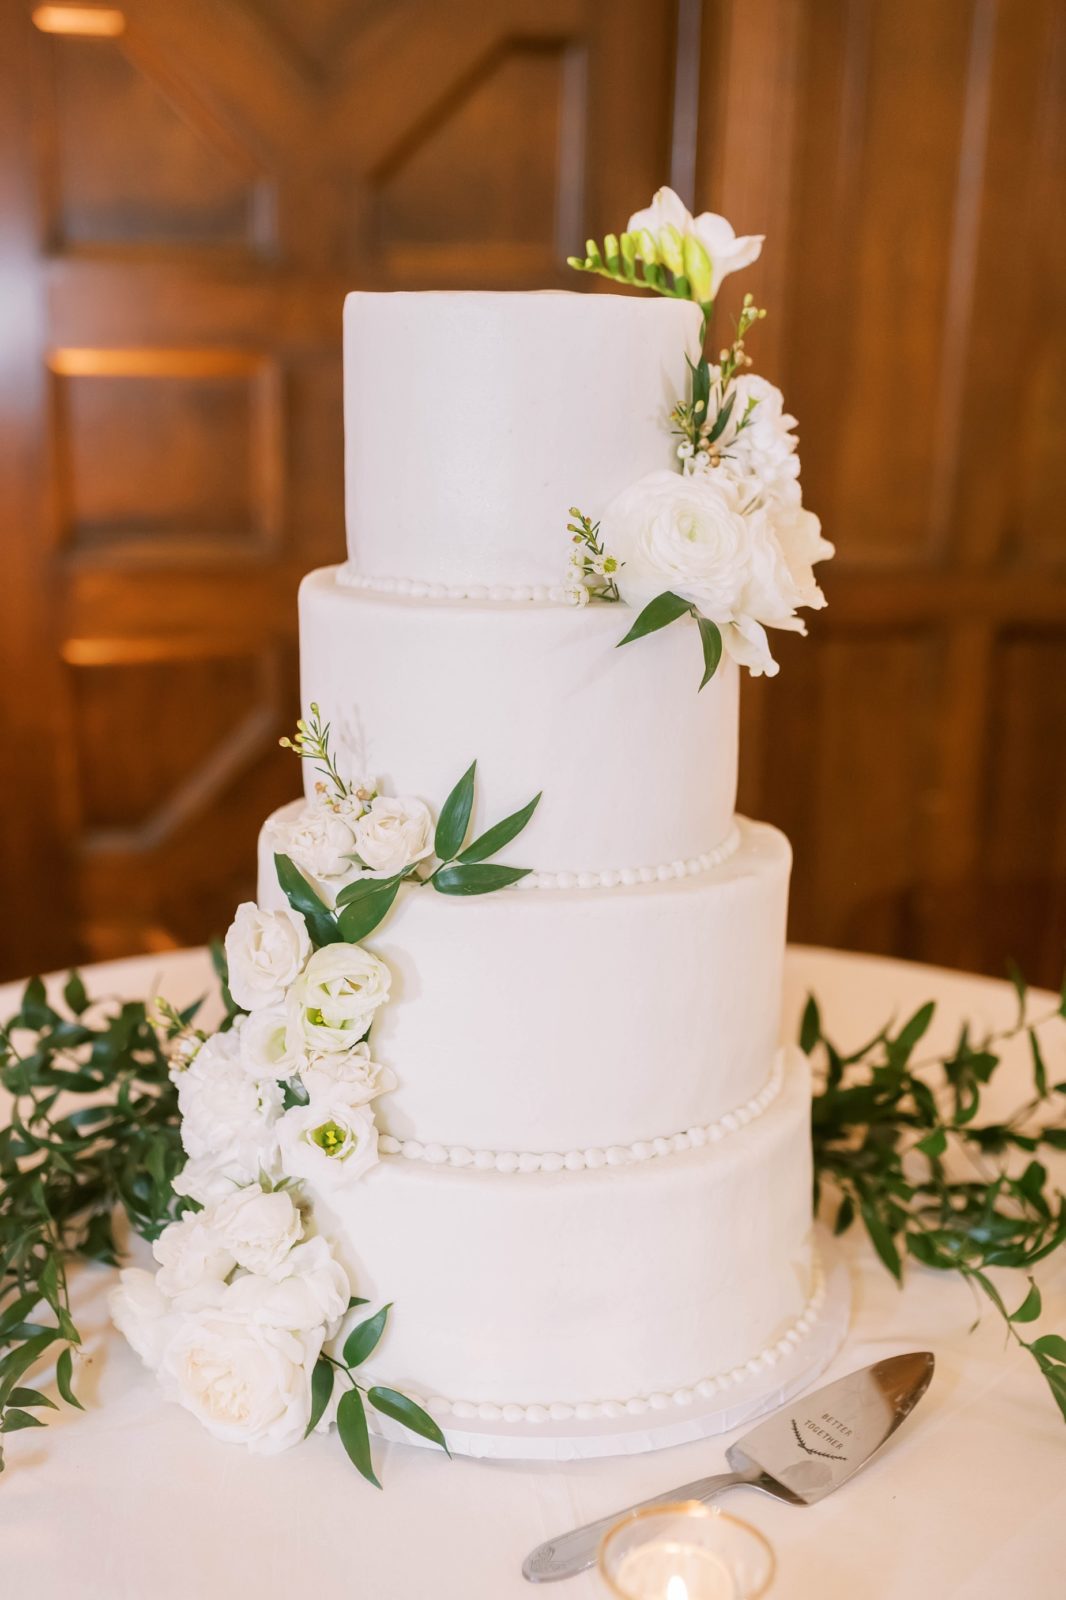 Christina Elliott Photography captures a four tier white buttercream simple wedding cake. four tier classic wedding cake #christinaelliottphotography #Houstonweddings #catholicchurchweddings #navyblue #sayIdo #Houstonweddingphotographers